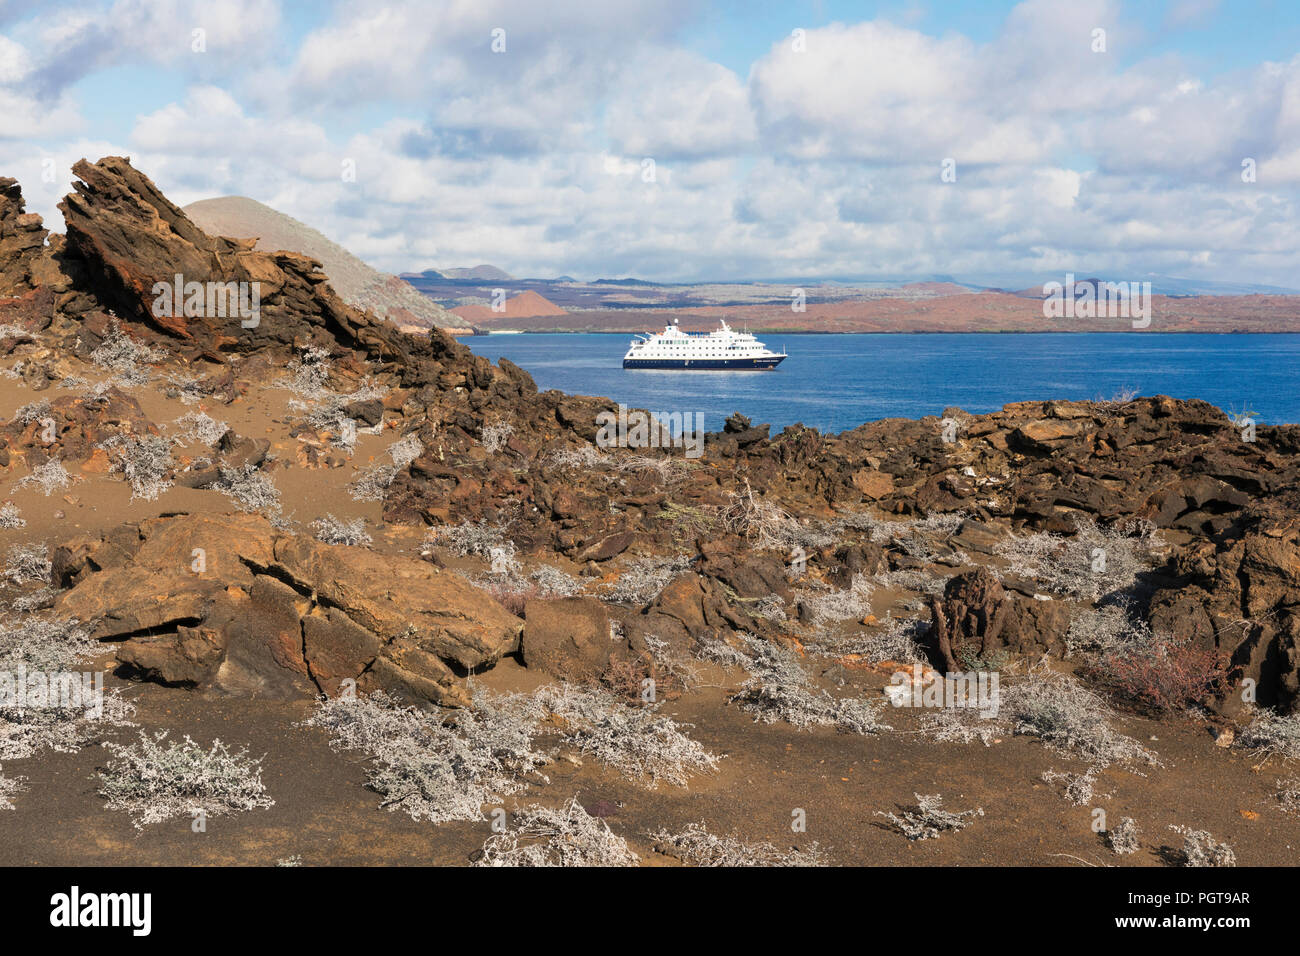 The National Geographic Endeavour II at anchor on Bartolomé Island, Galápagos, Ecuador. Stock Photo